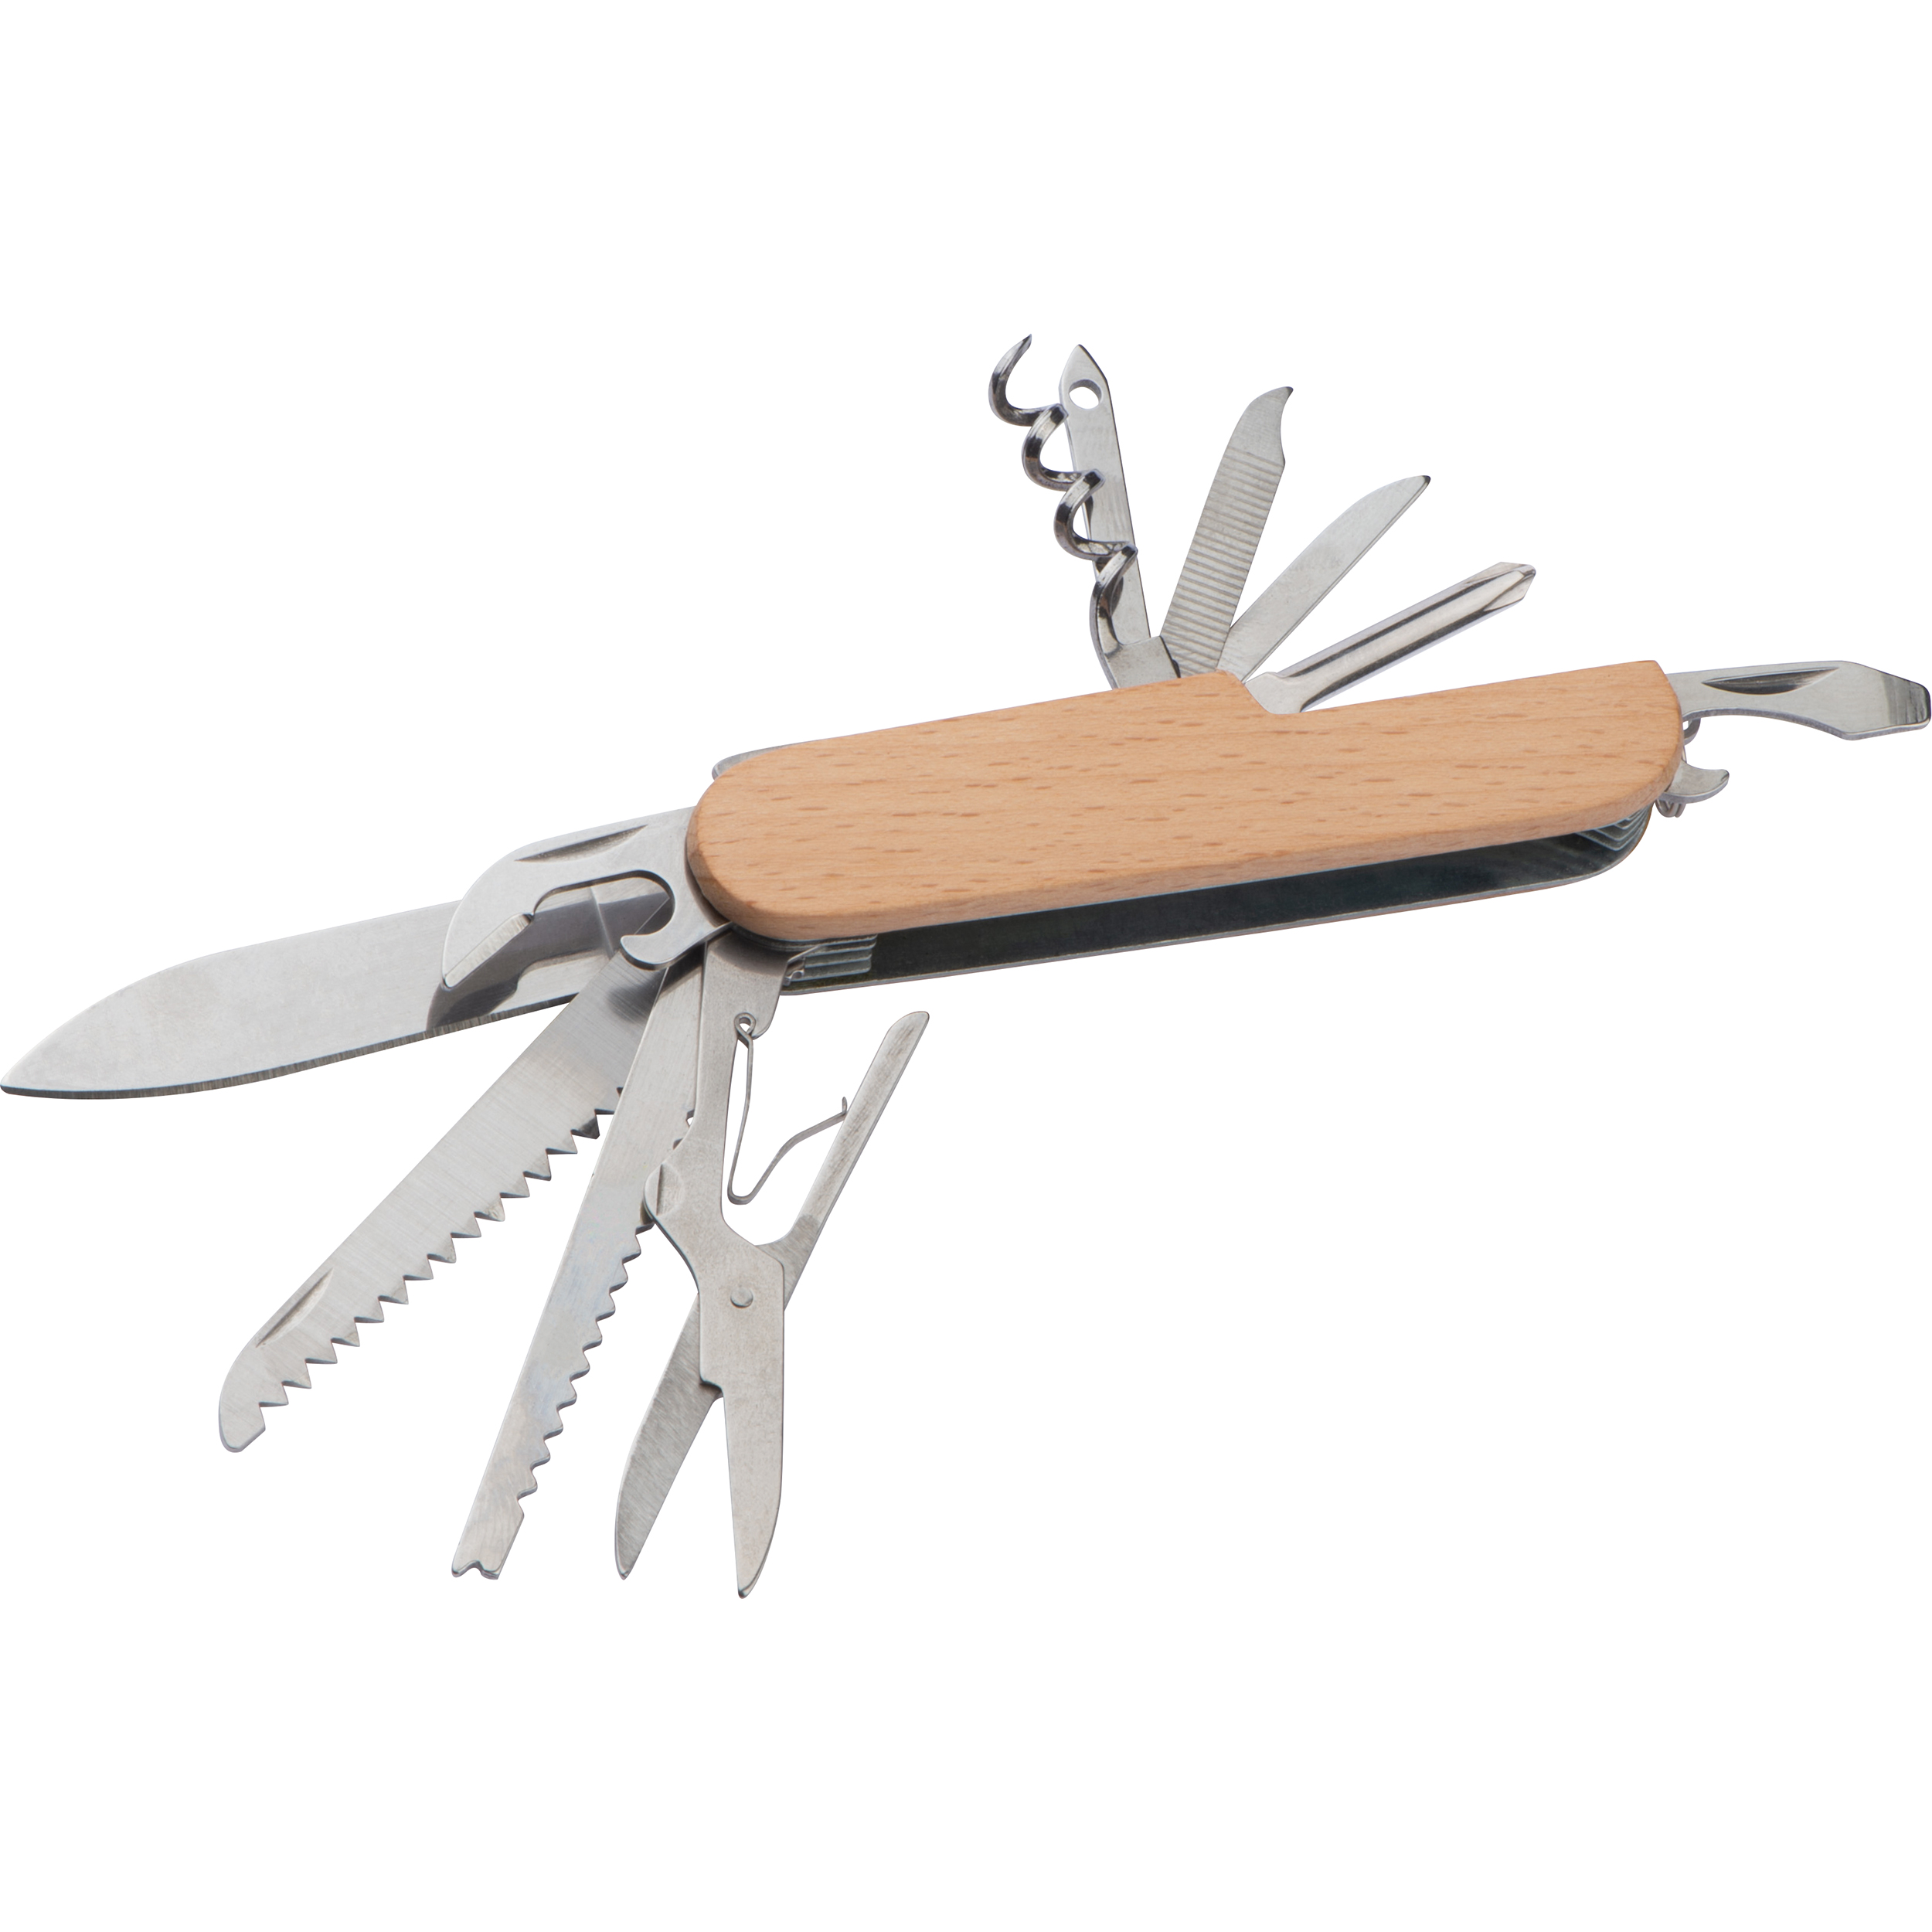 Multifunctional pocket knife - Barkby